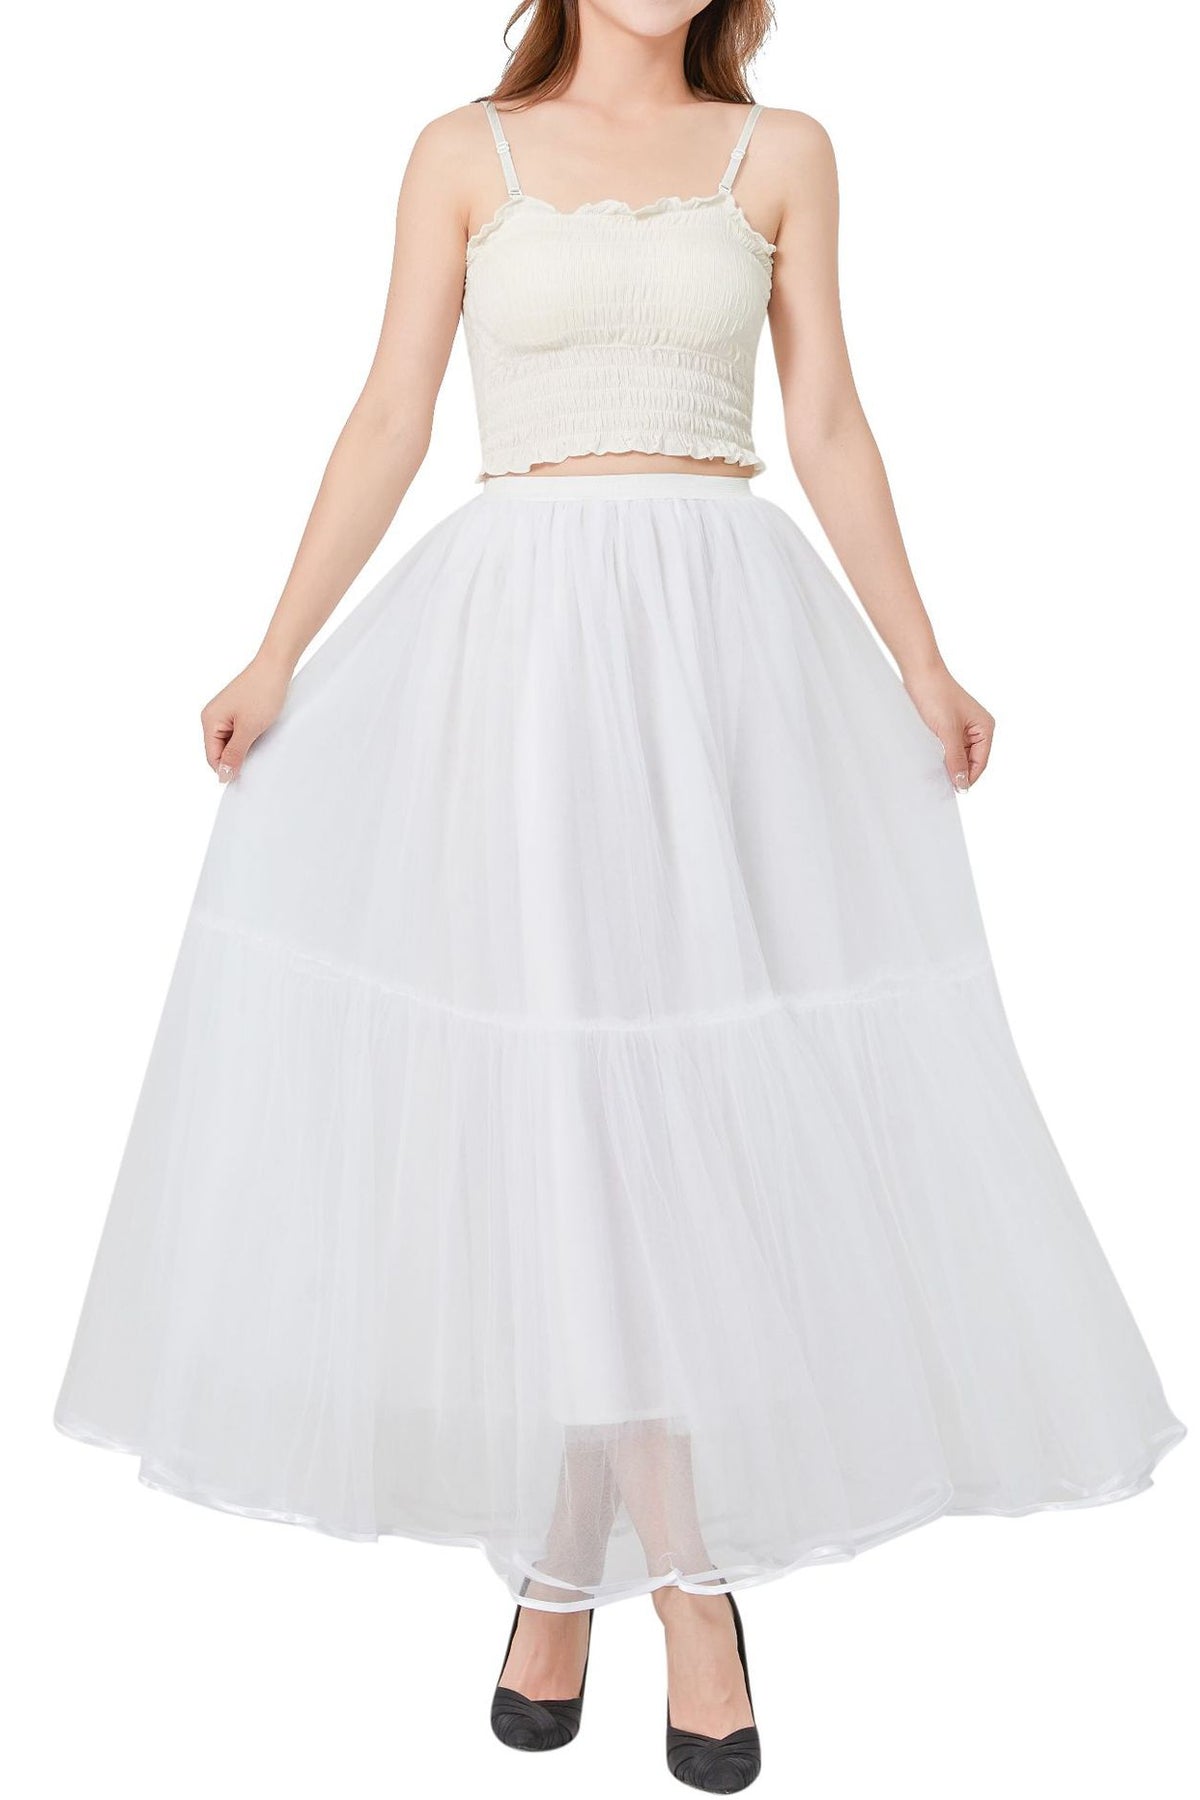 White Tulle A-line Petticoats